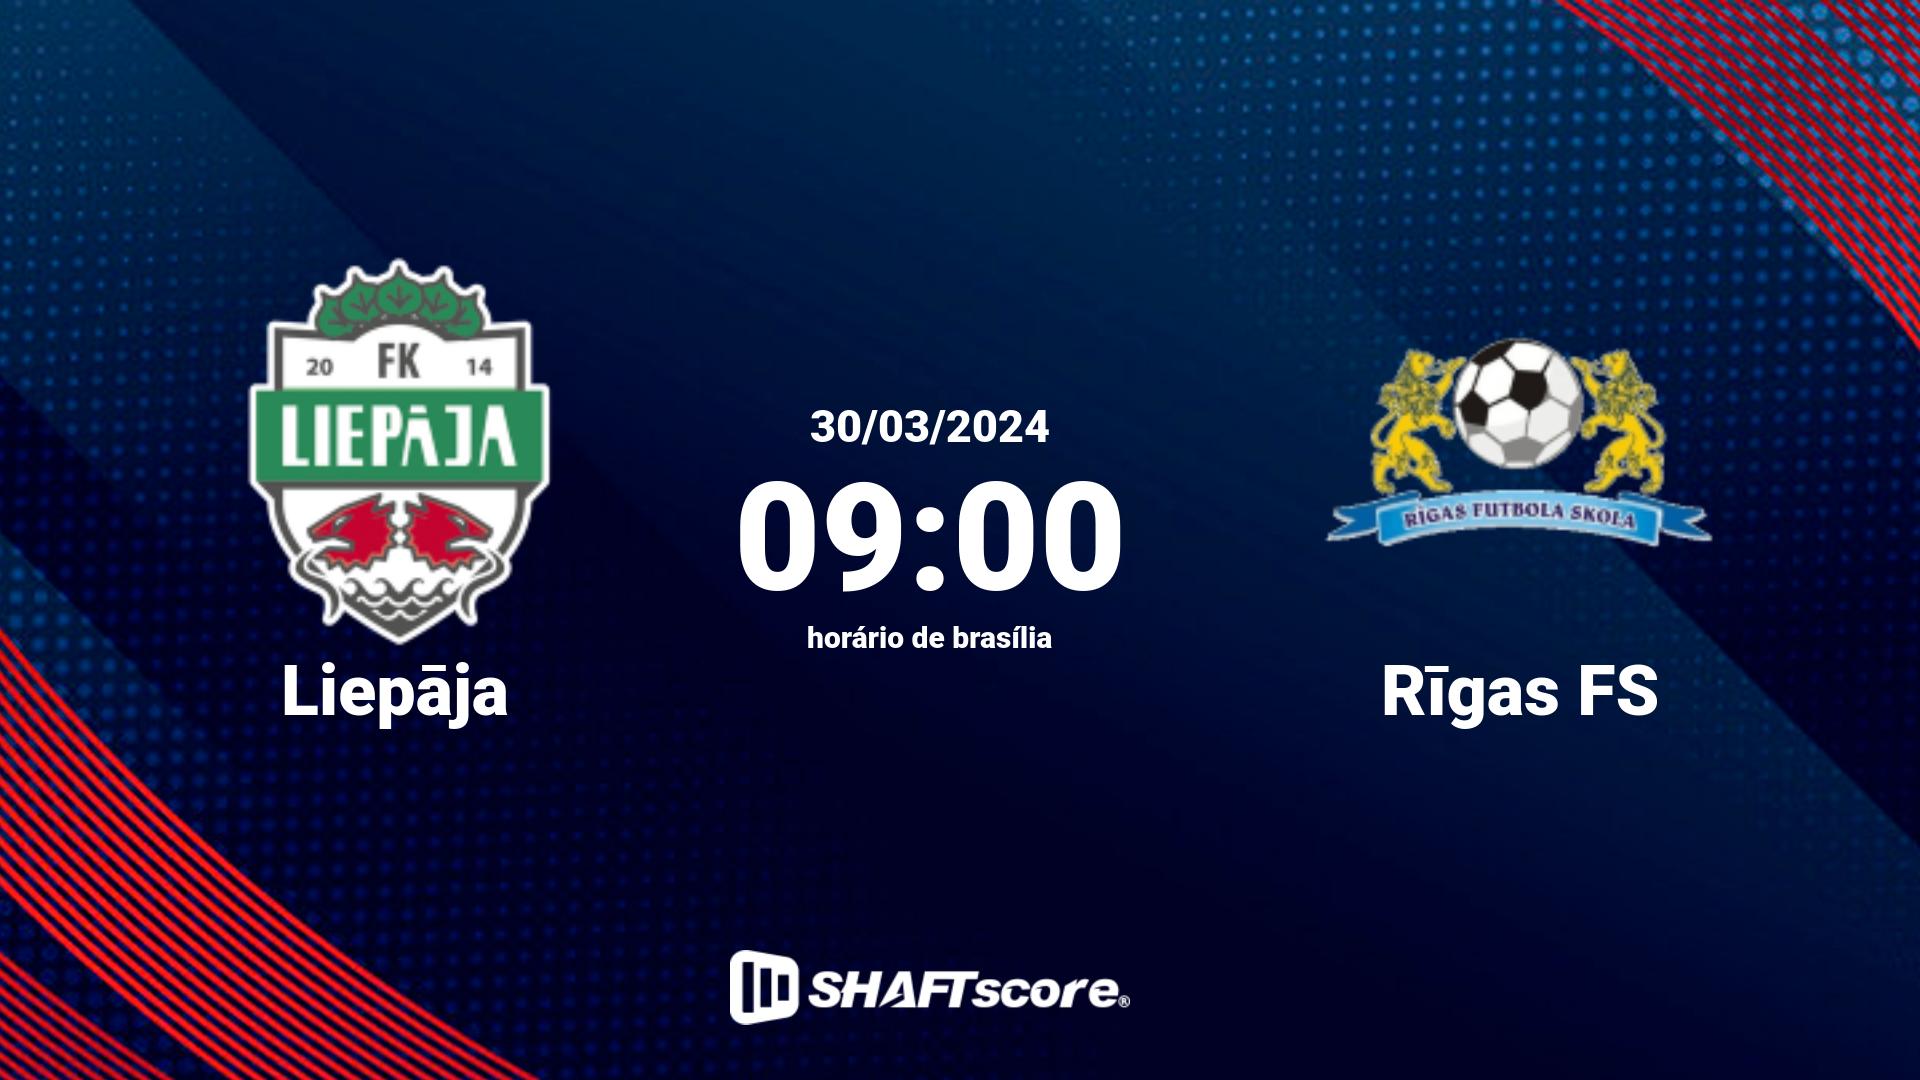 Estatísticas do jogo Liepāja vs Rīgas FS 30.03 09:00